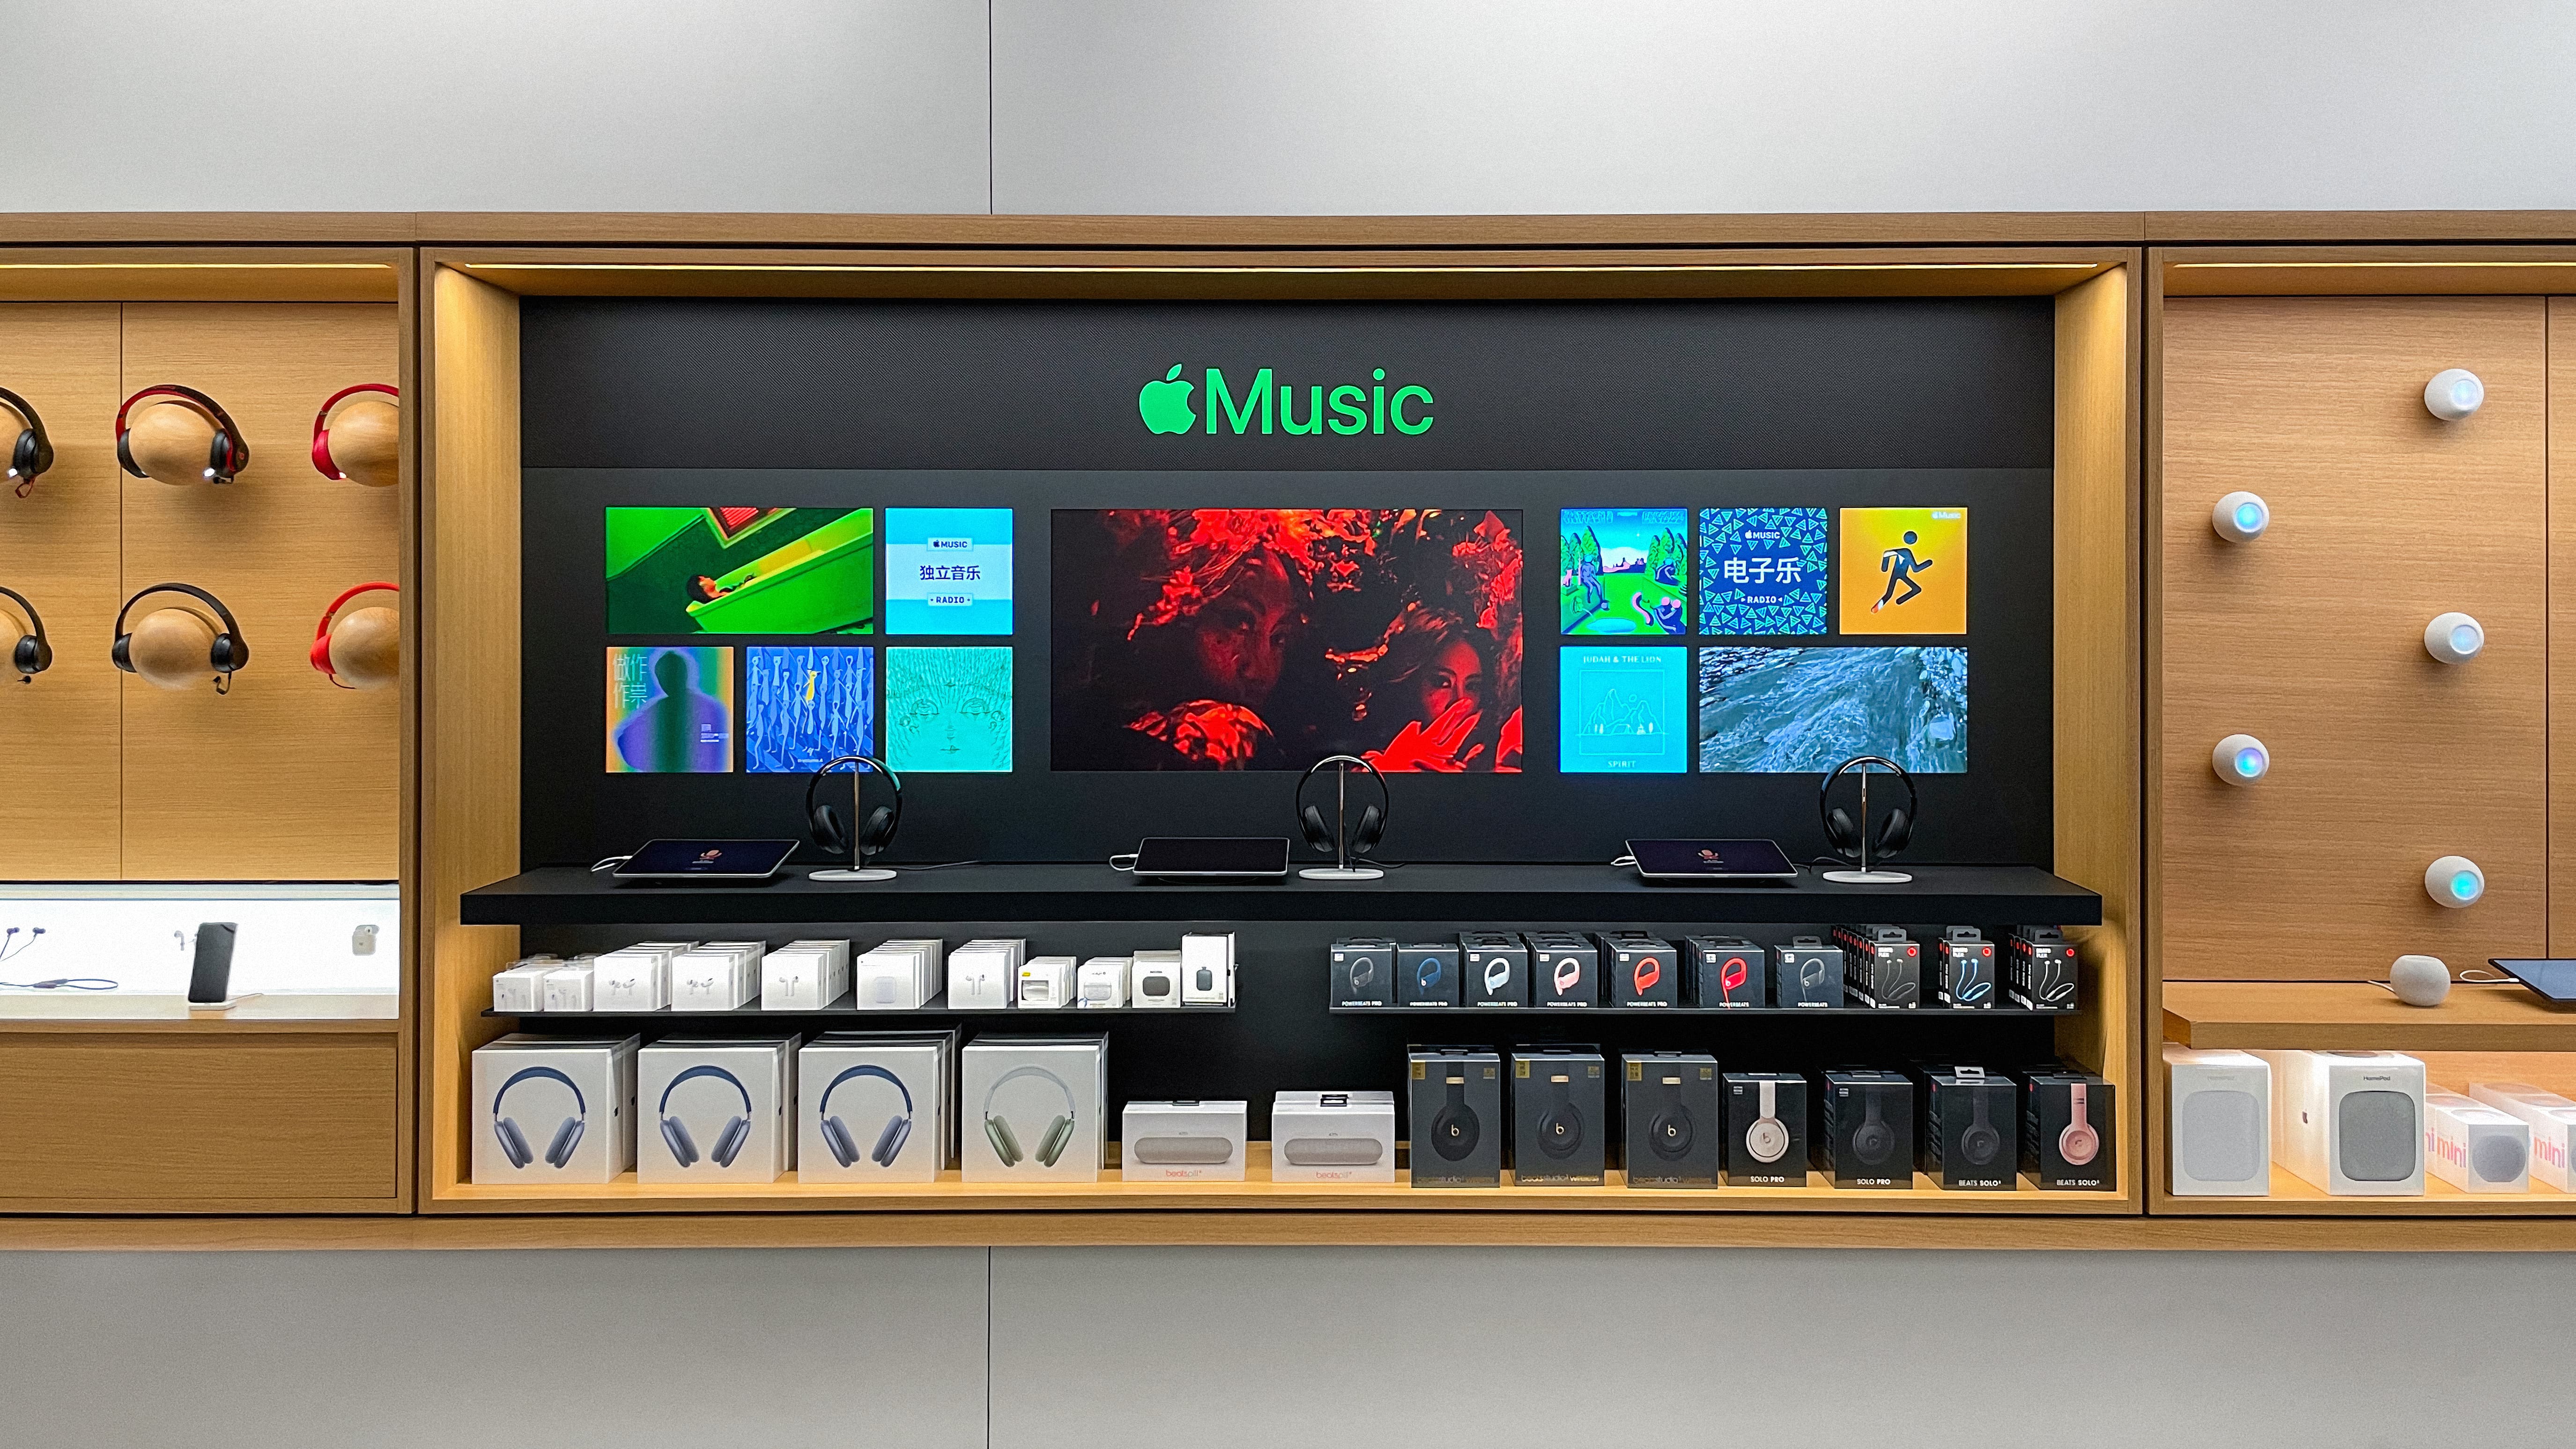 Apple Music  Media Markt Online Shop